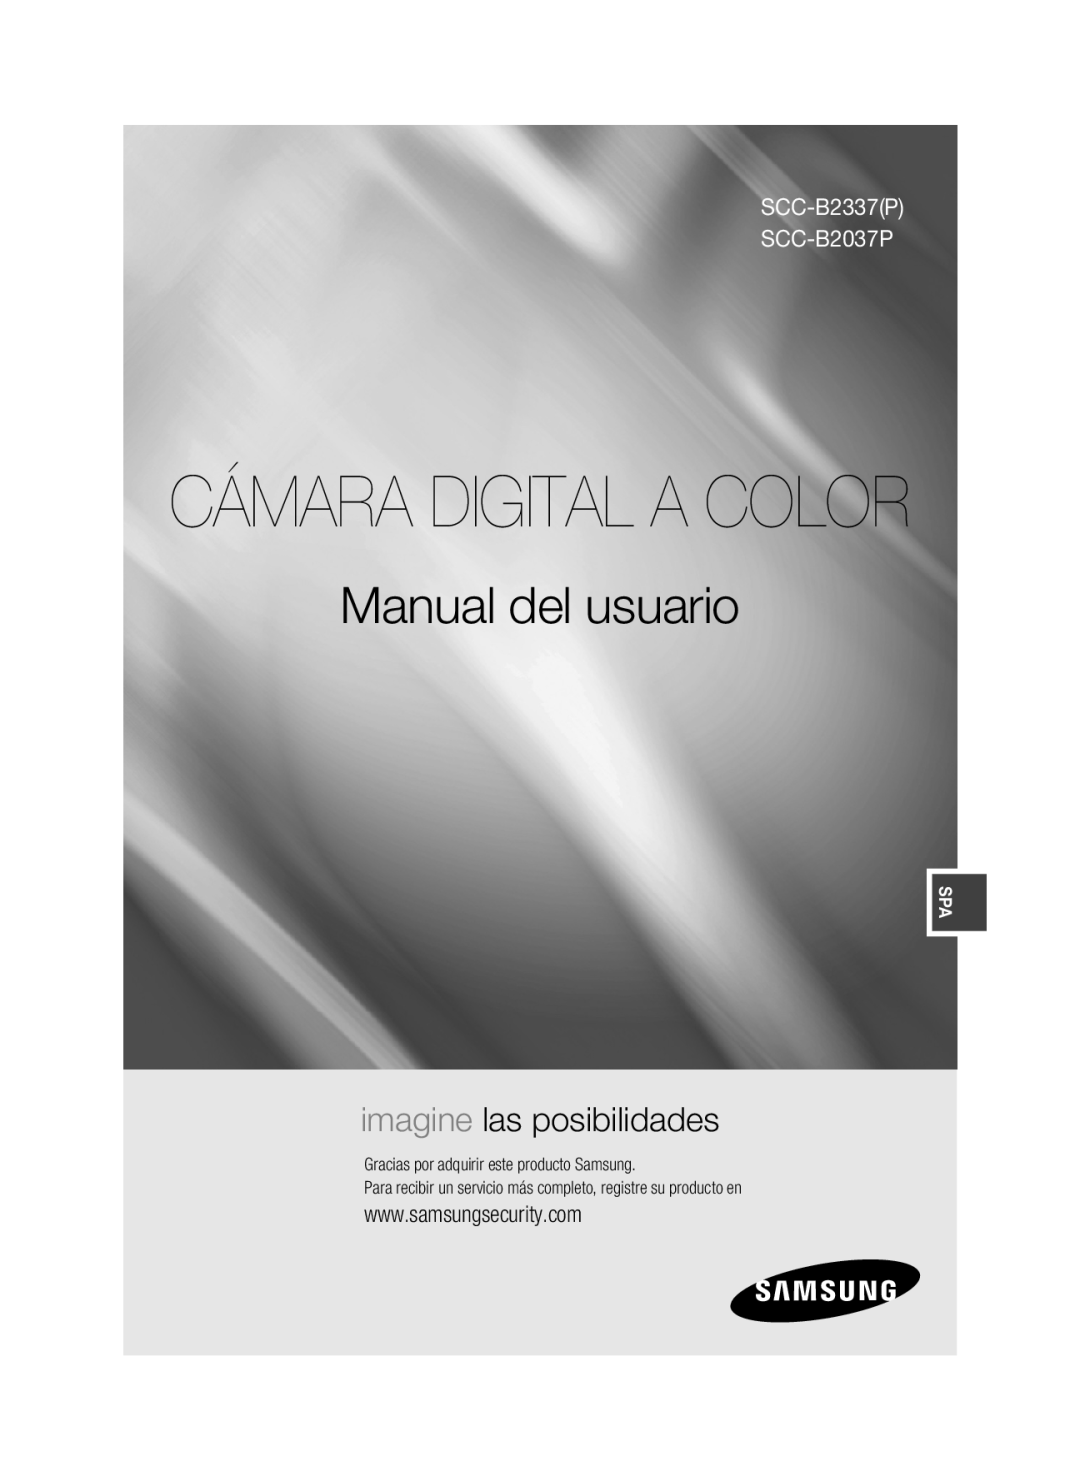 Samsung manual Cámara Digital A Color, Manual del usuario, imagine las posibilidades, SCC-B2337P SCC-B2037P 